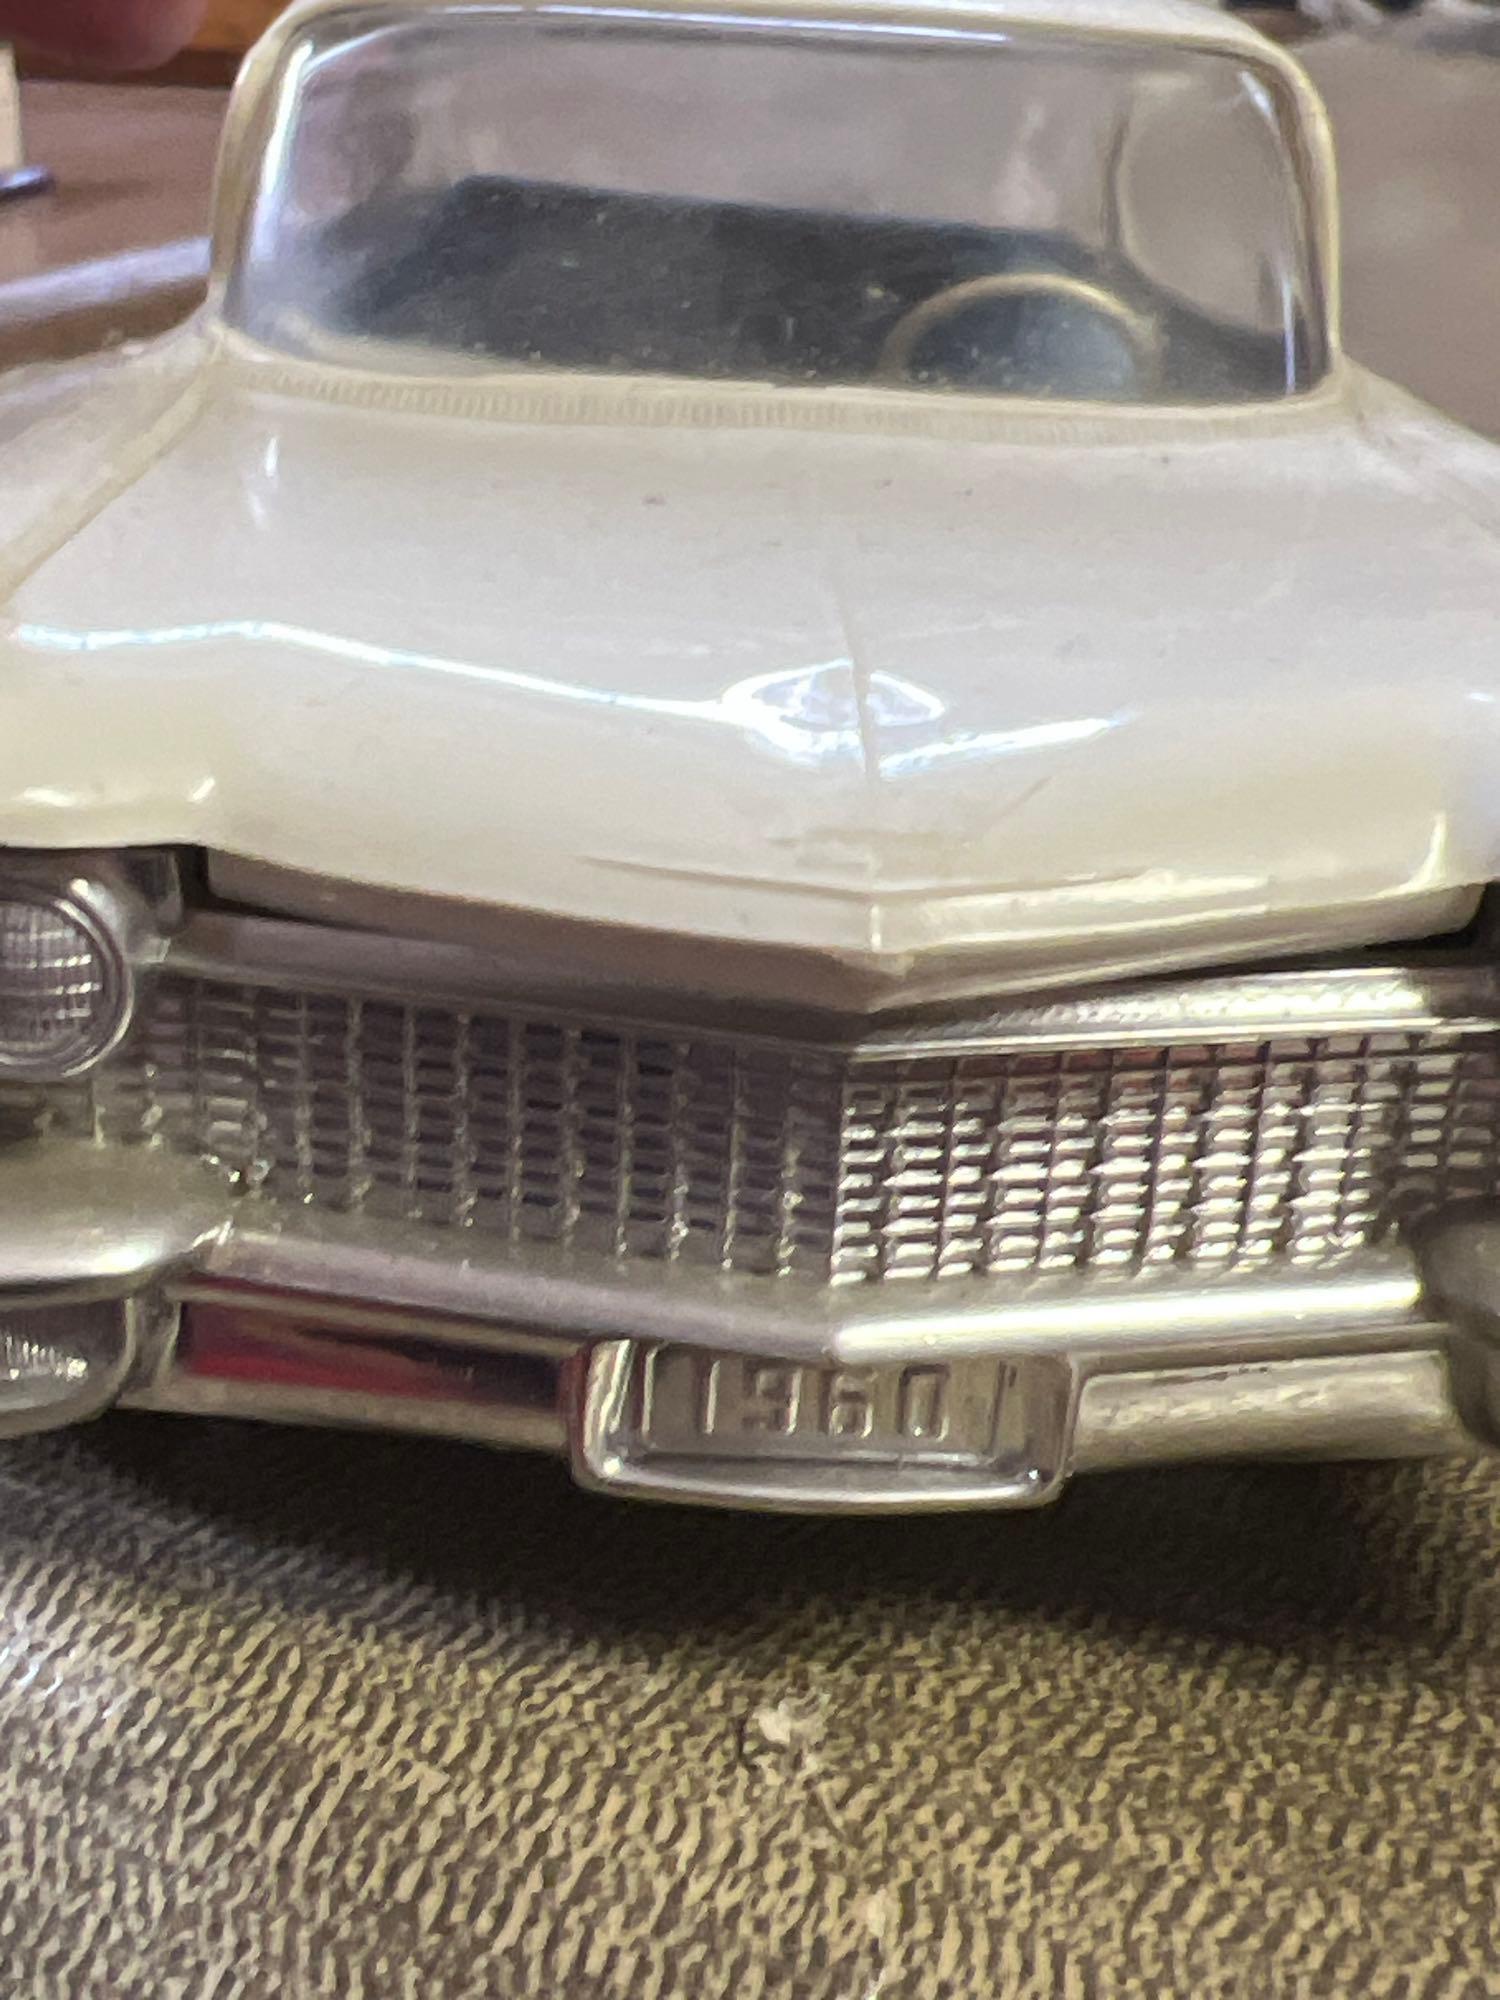 4- 1960 61 and 63 Cadillac Promo cars